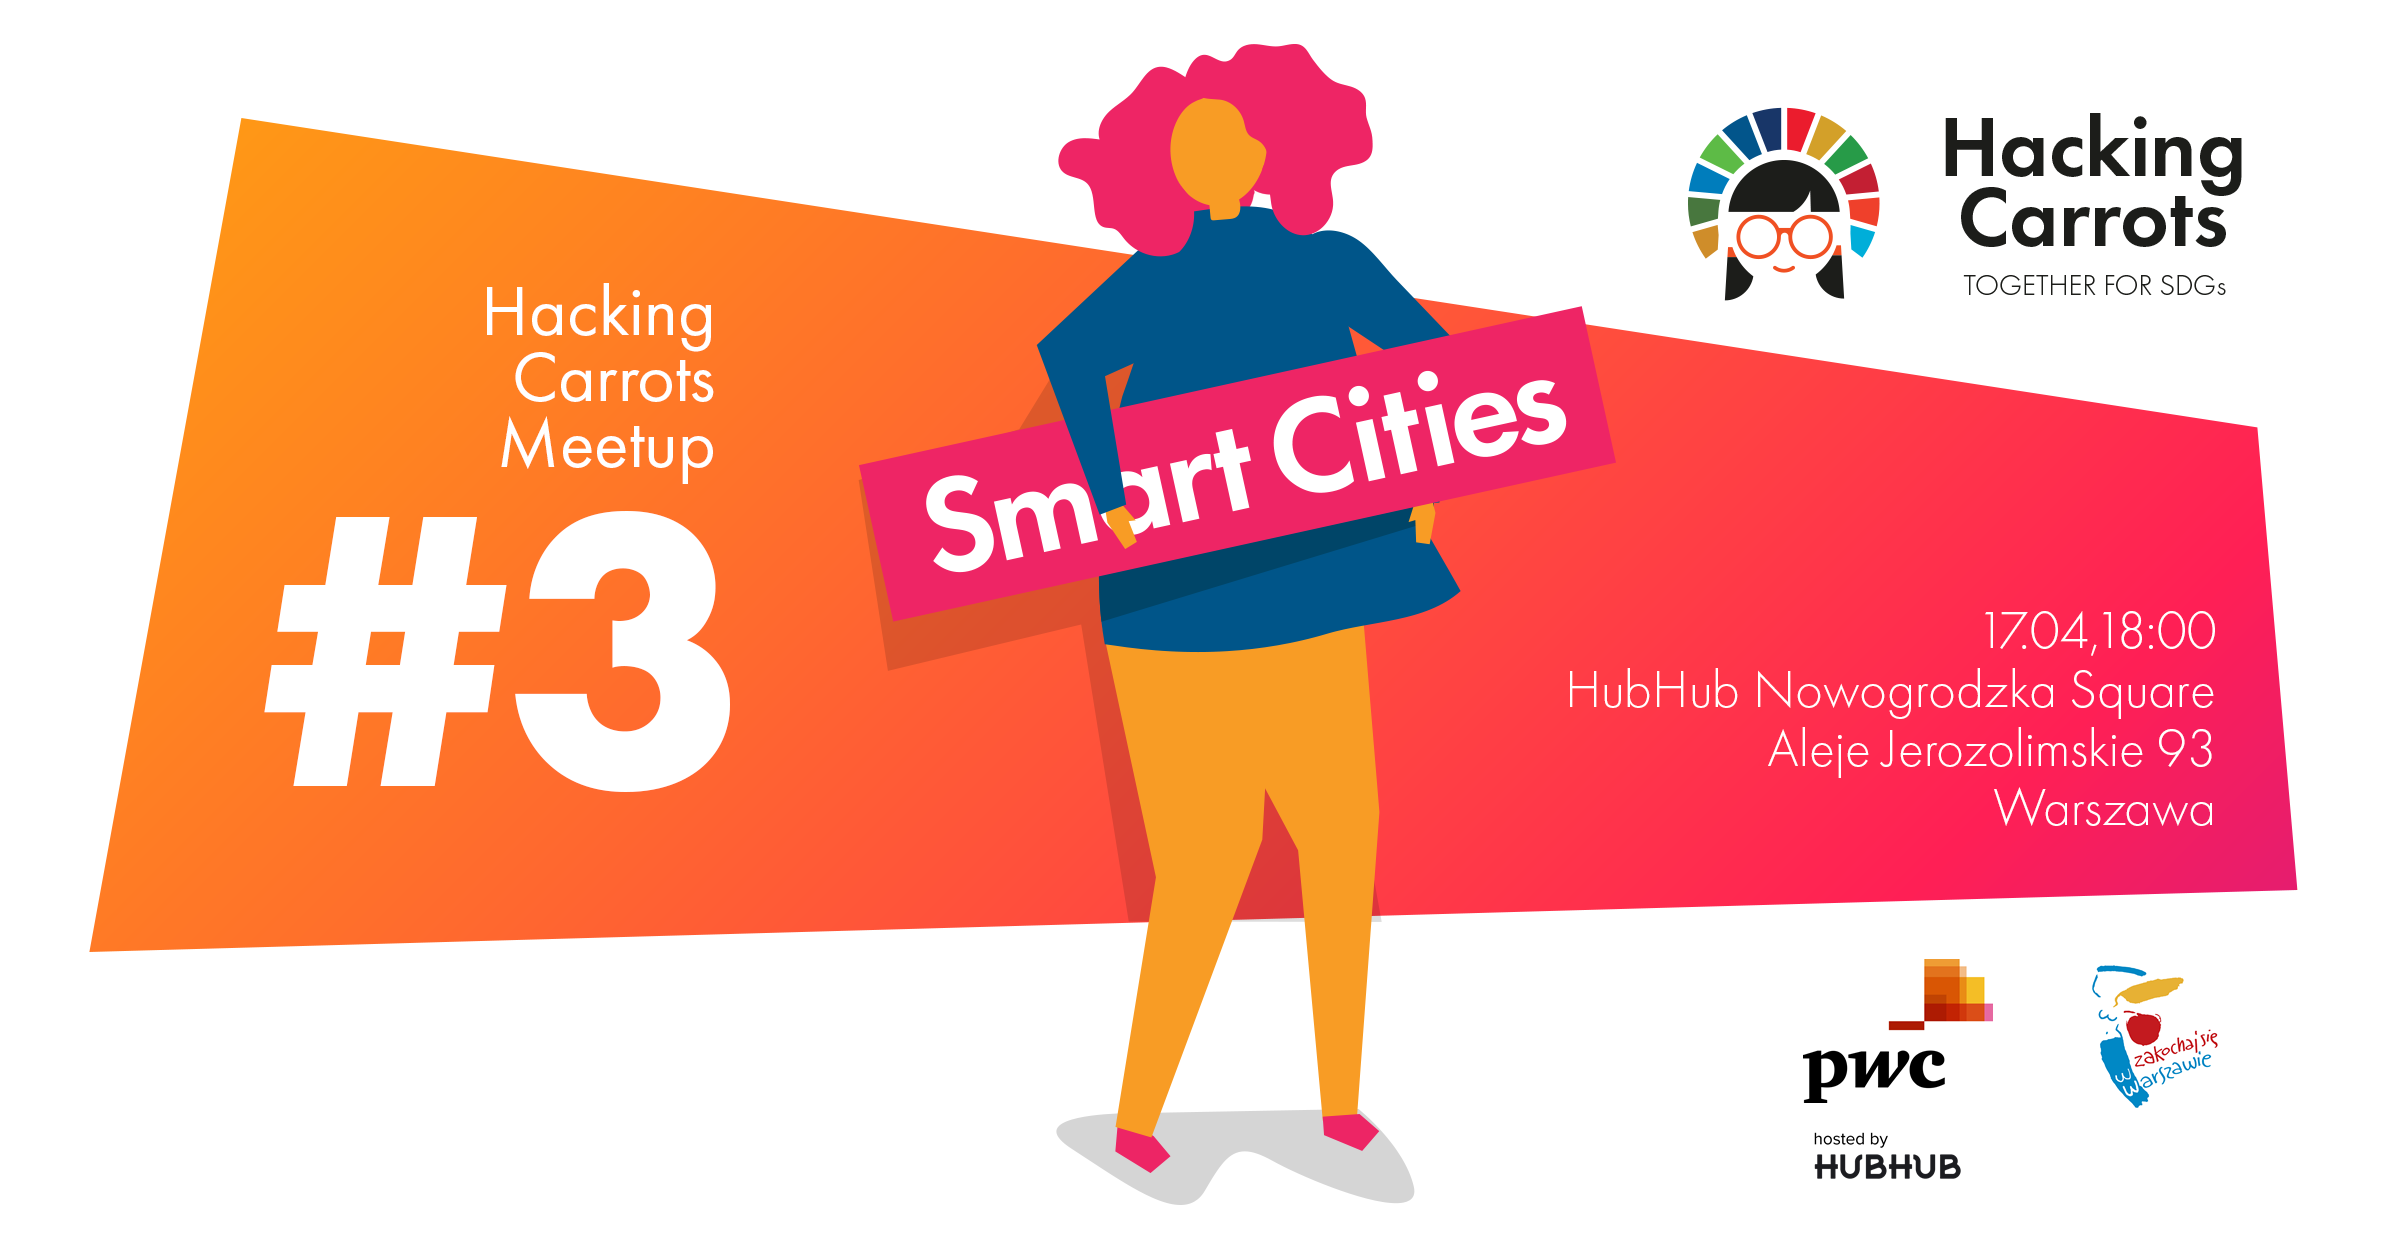 hacking-carrots-meetup-3-smart-cities